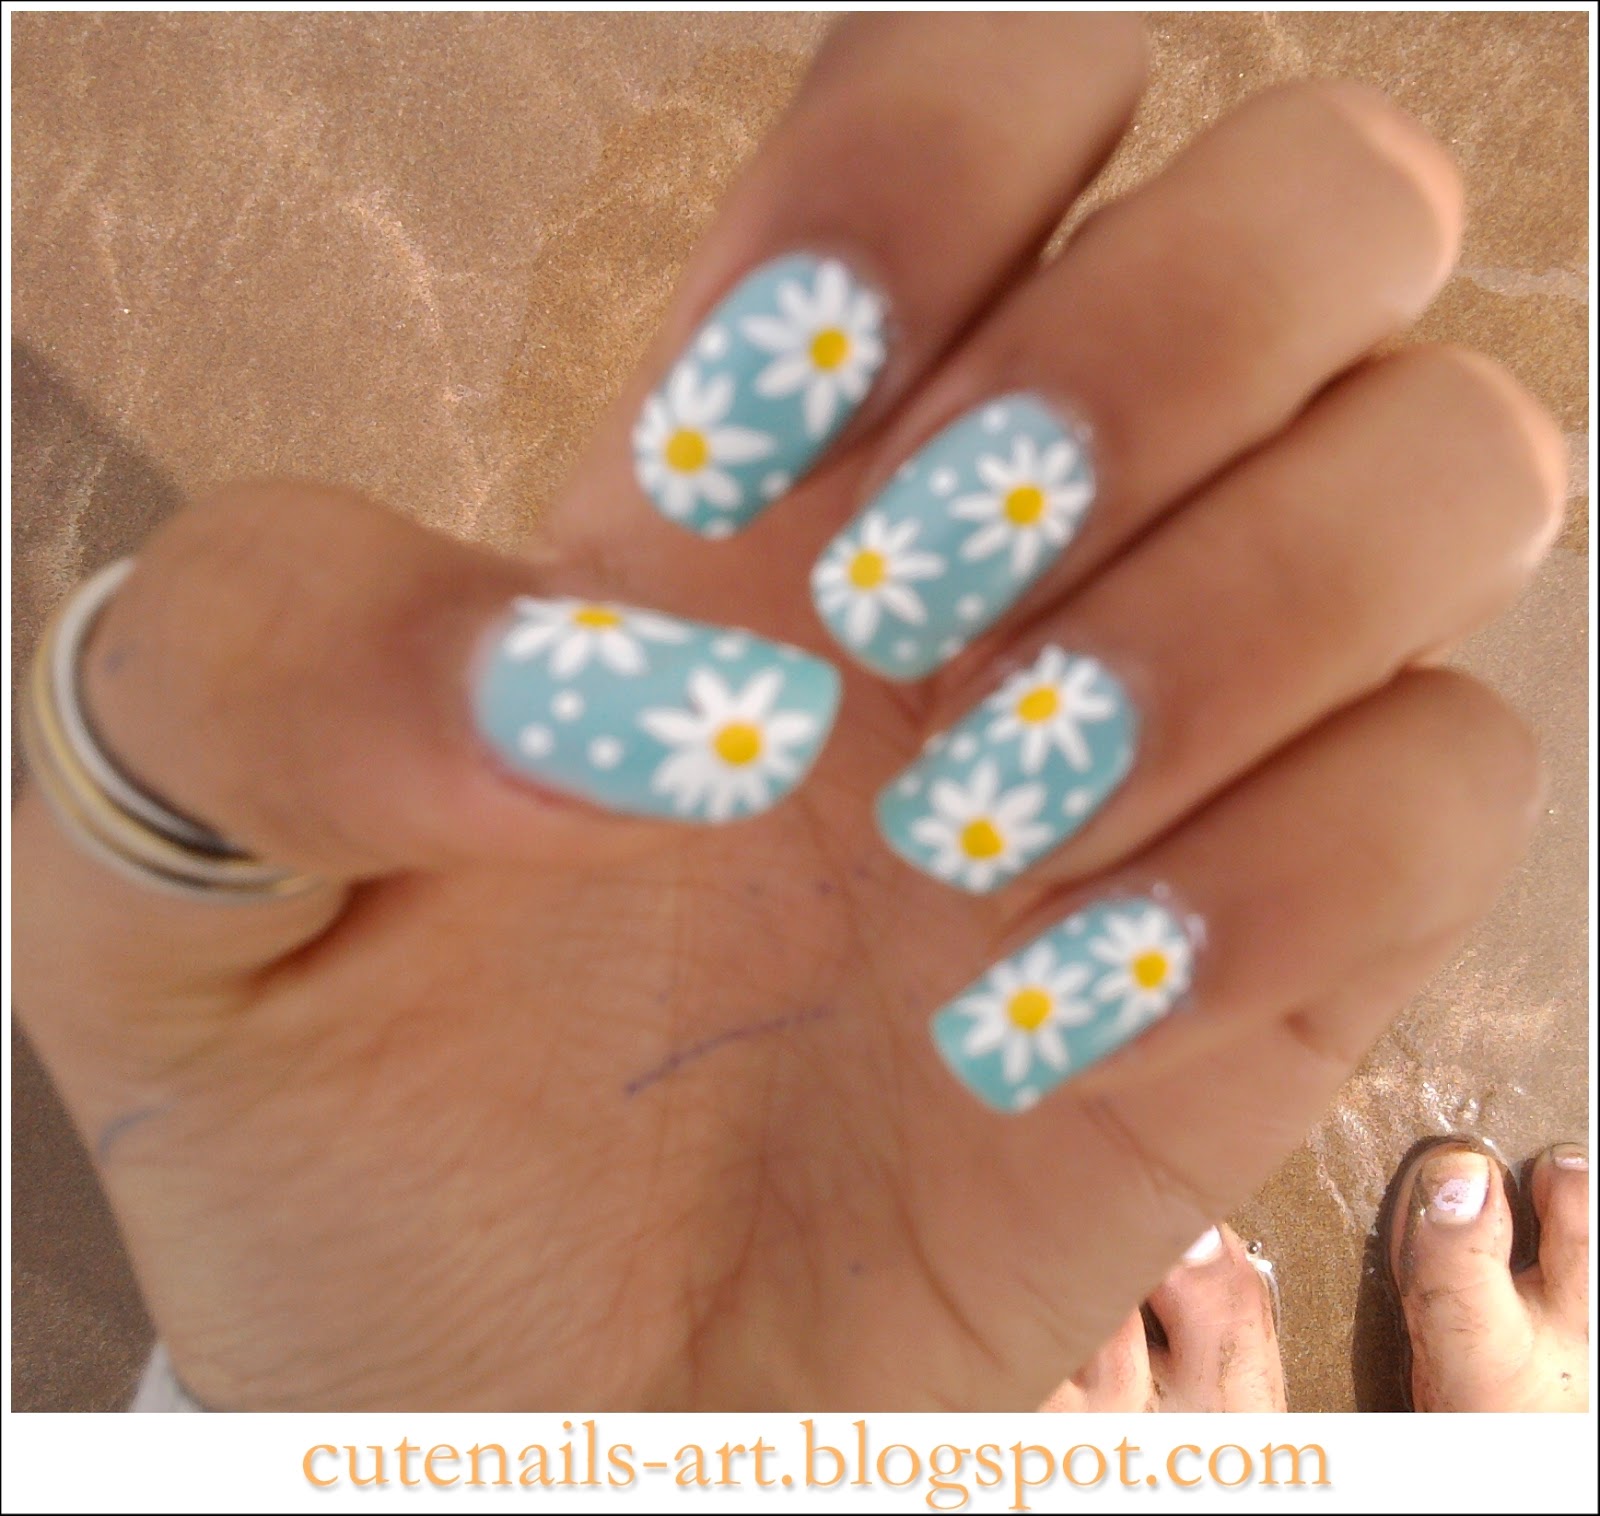 cutenails-art: spring nails art : Daisy flowers